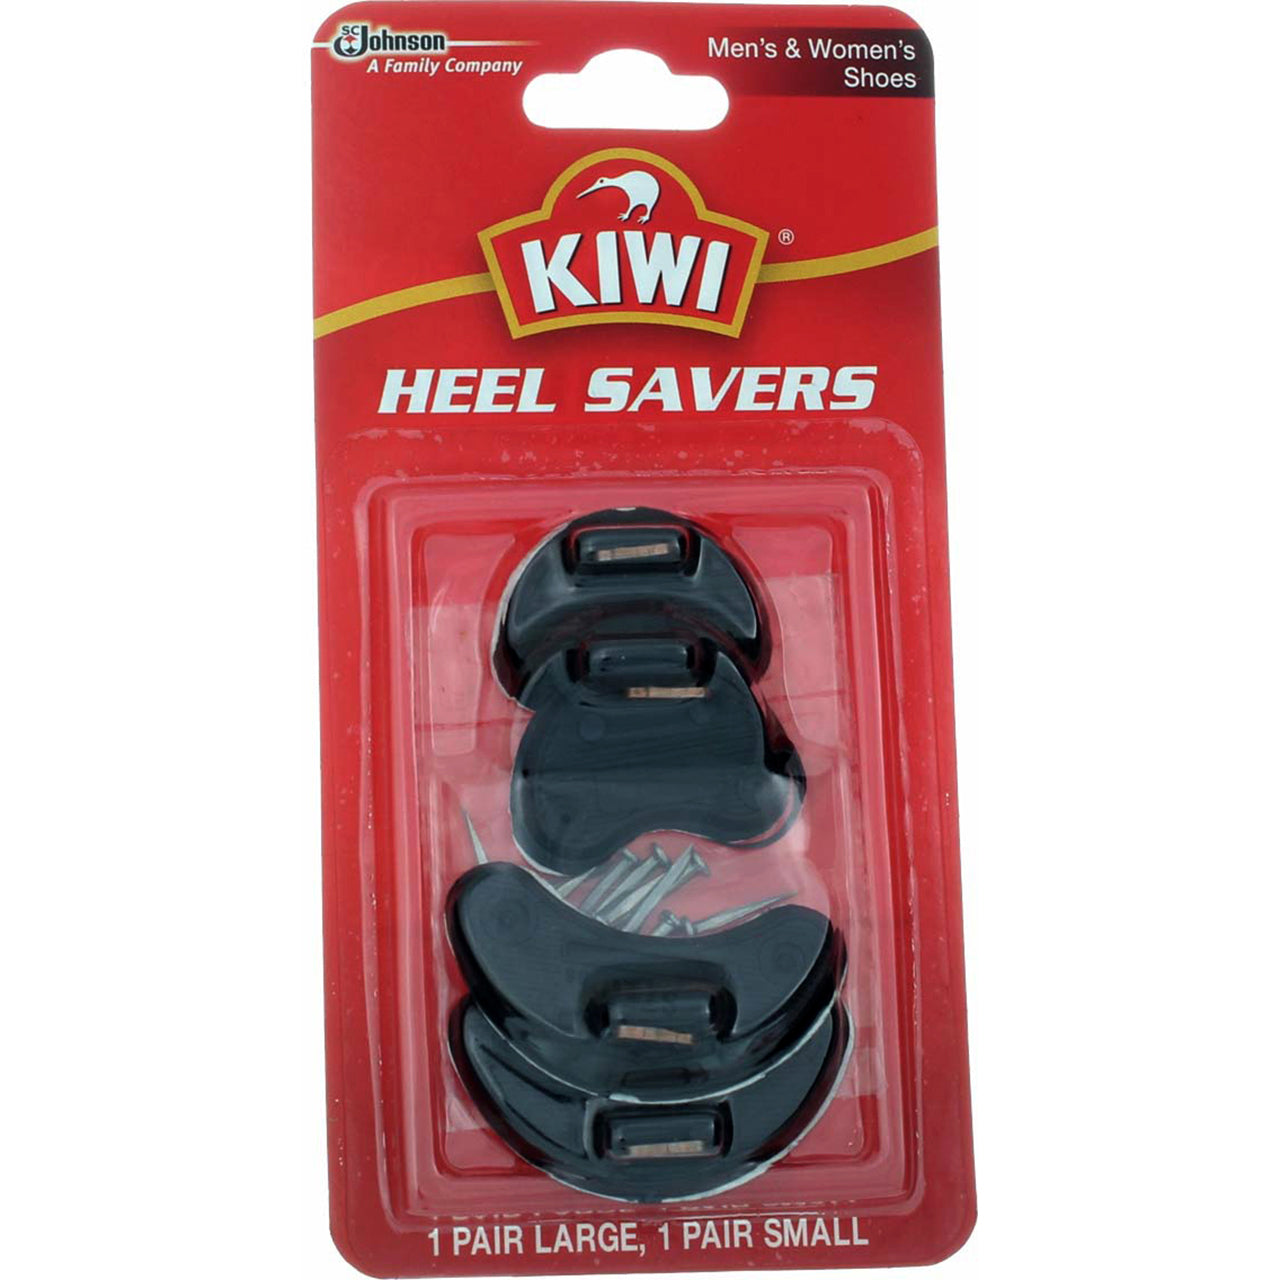 KIWI® Heel & Edge